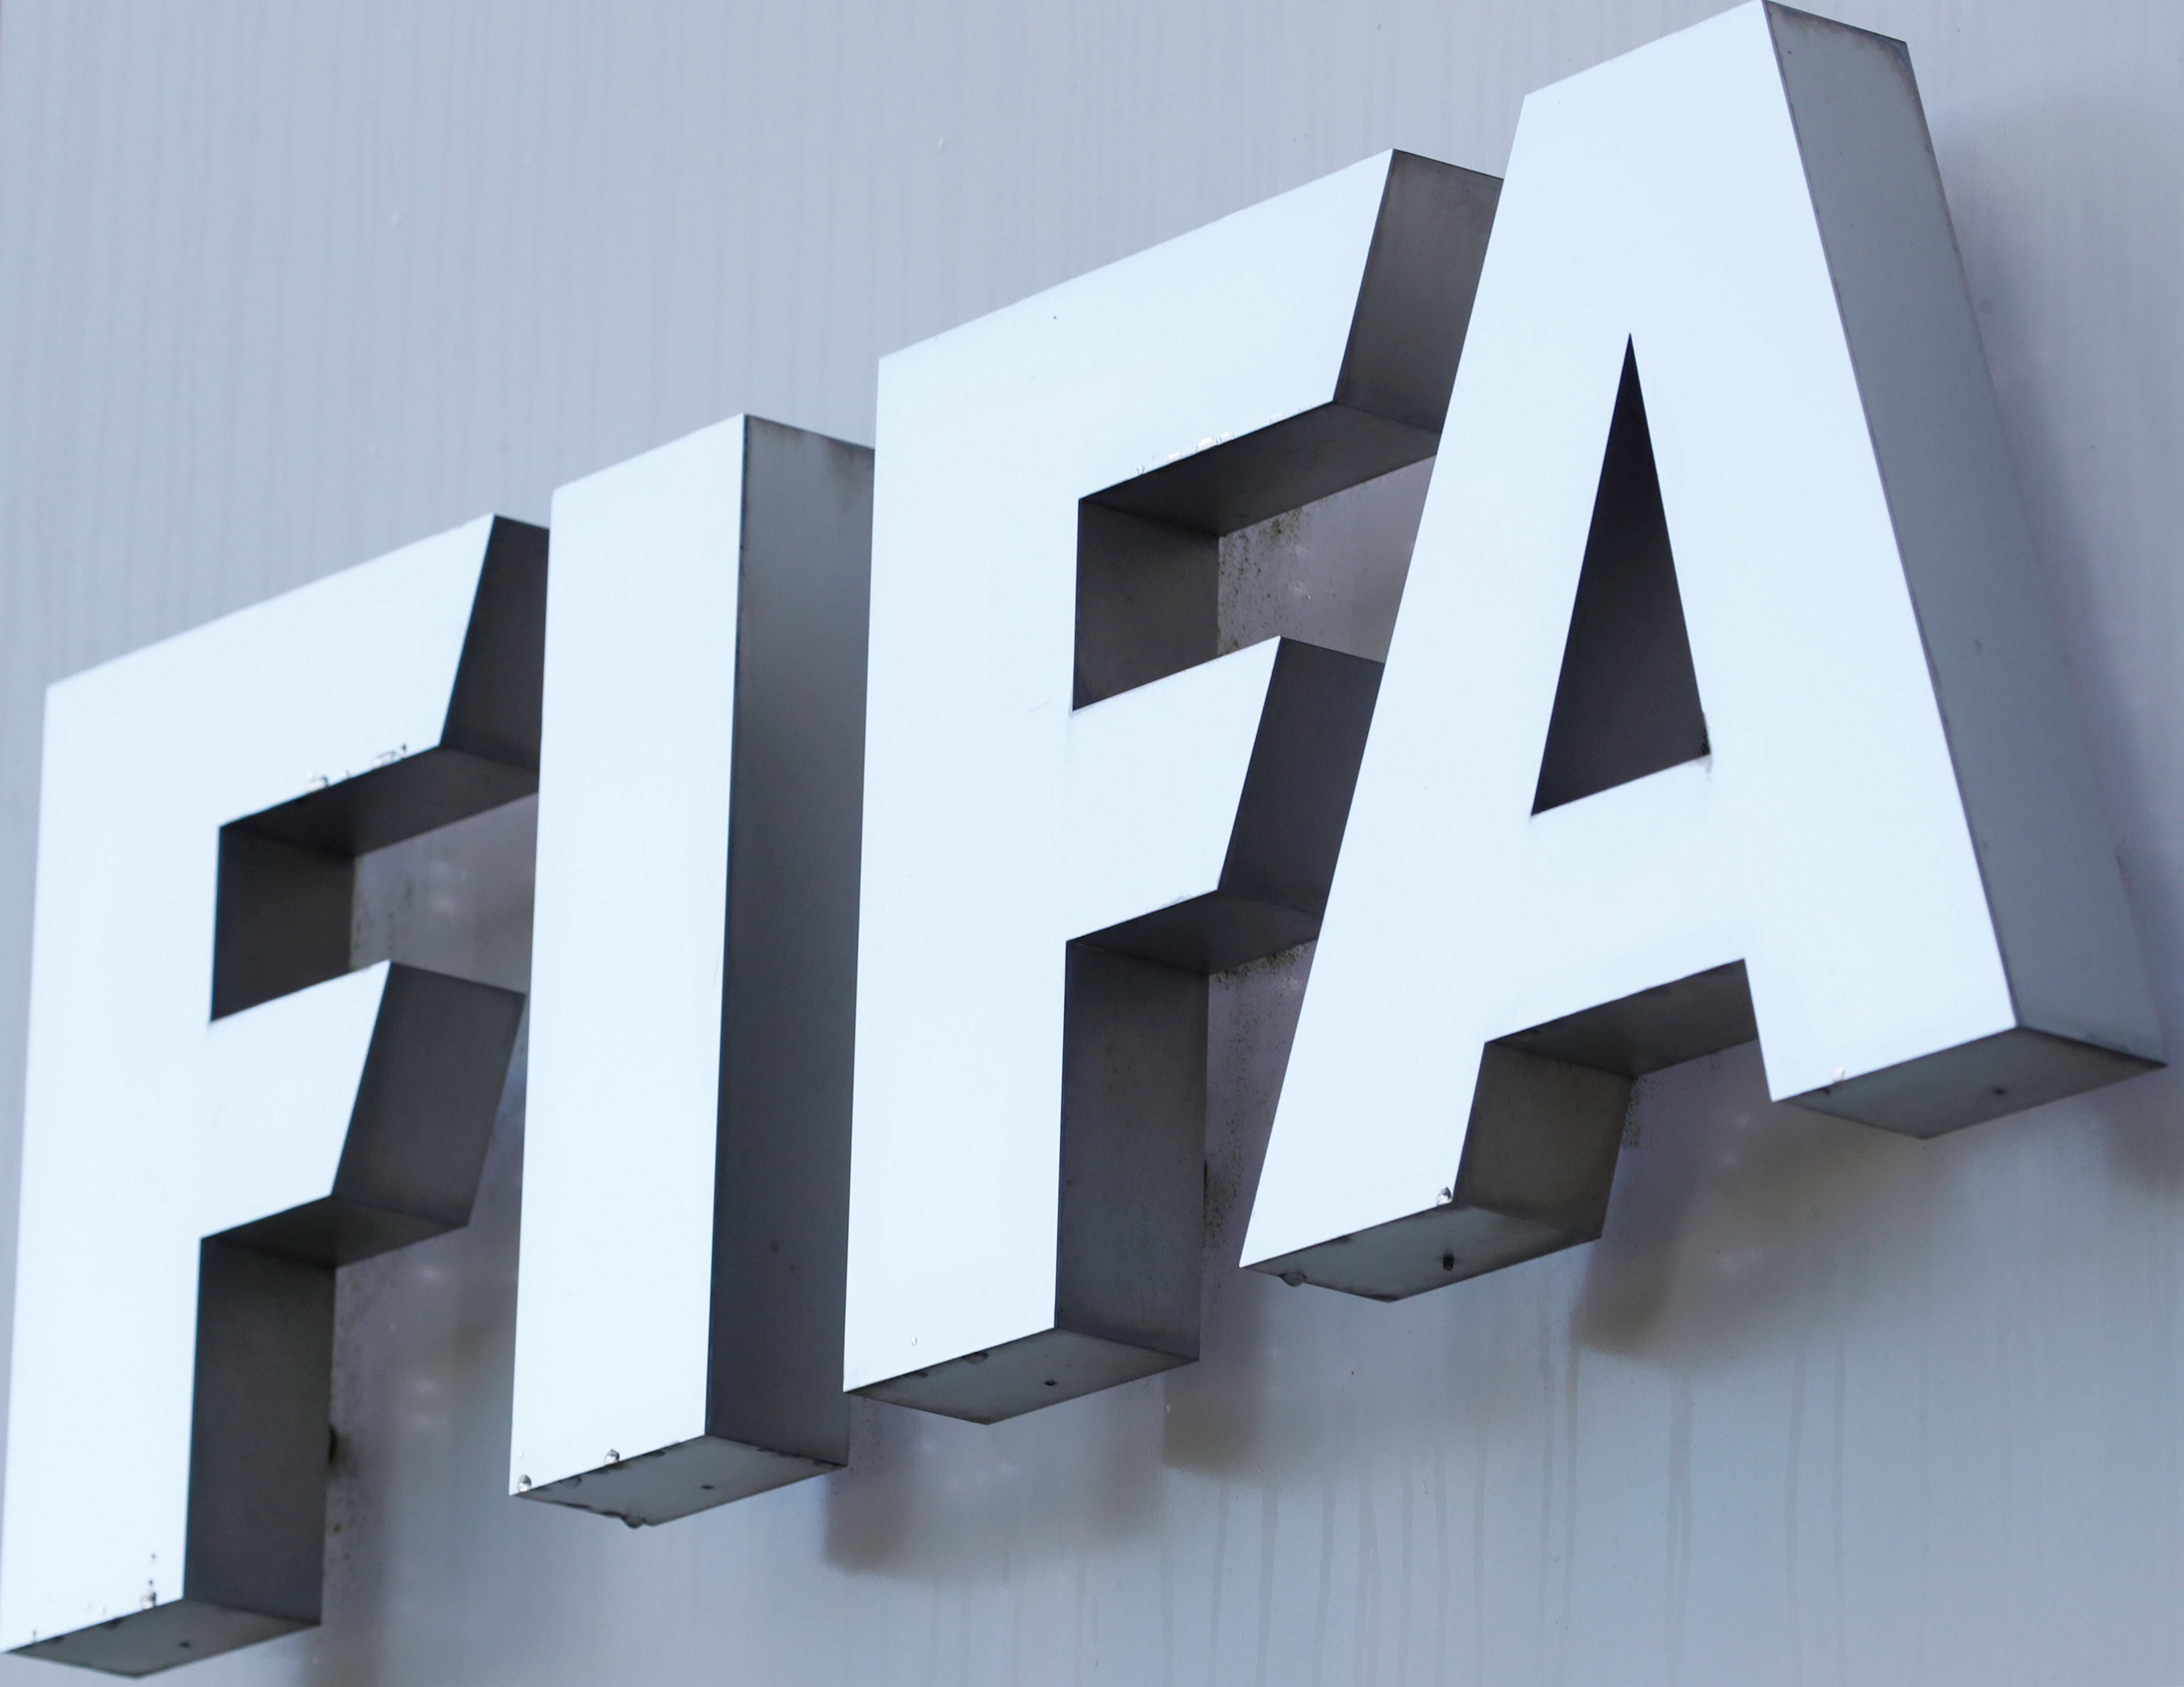 FIFA's logo is seen in front of its headquarters in Zurich, Switzerland August 5, 2020. REUTERS/Arnd Wiegmann